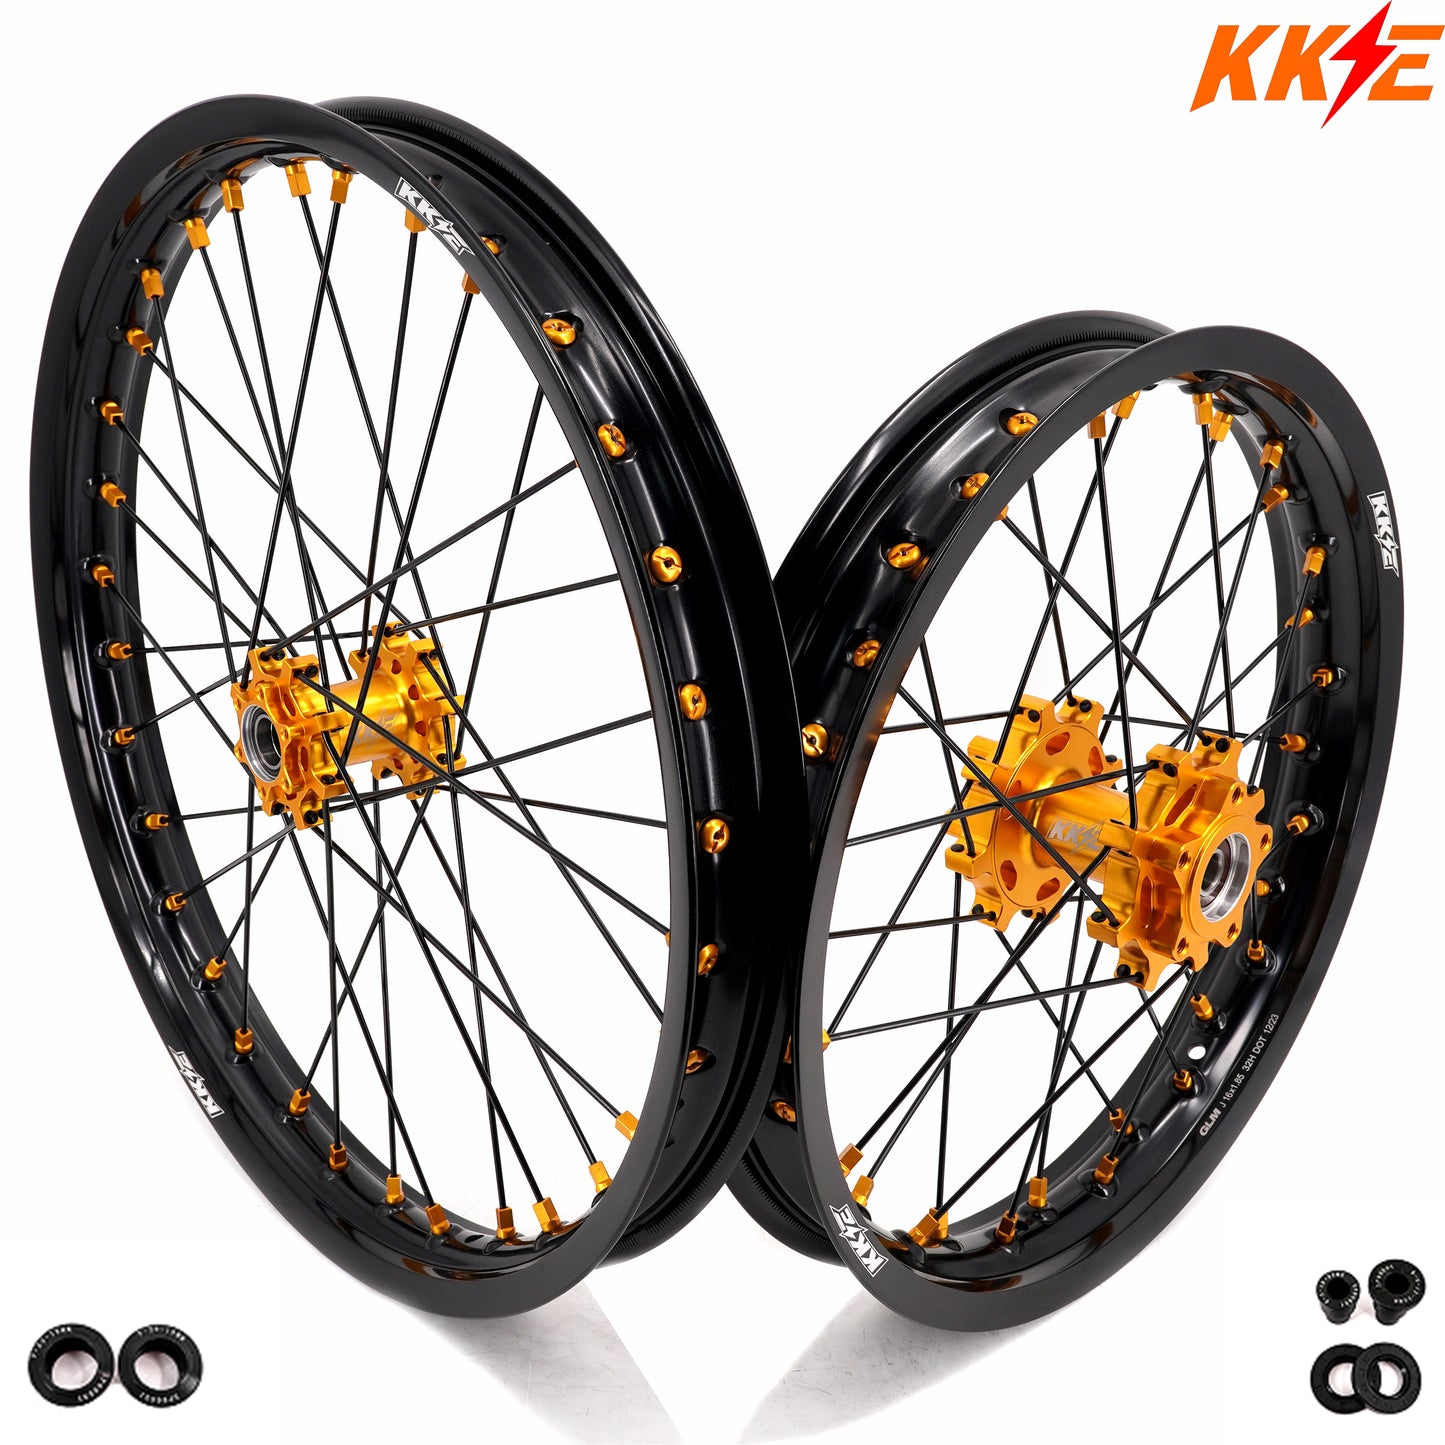 KKE 1.6*19" & 1.85*16" Rims Fit Talaria Sting MX3 /R MX4 E-bike Wheels Gold